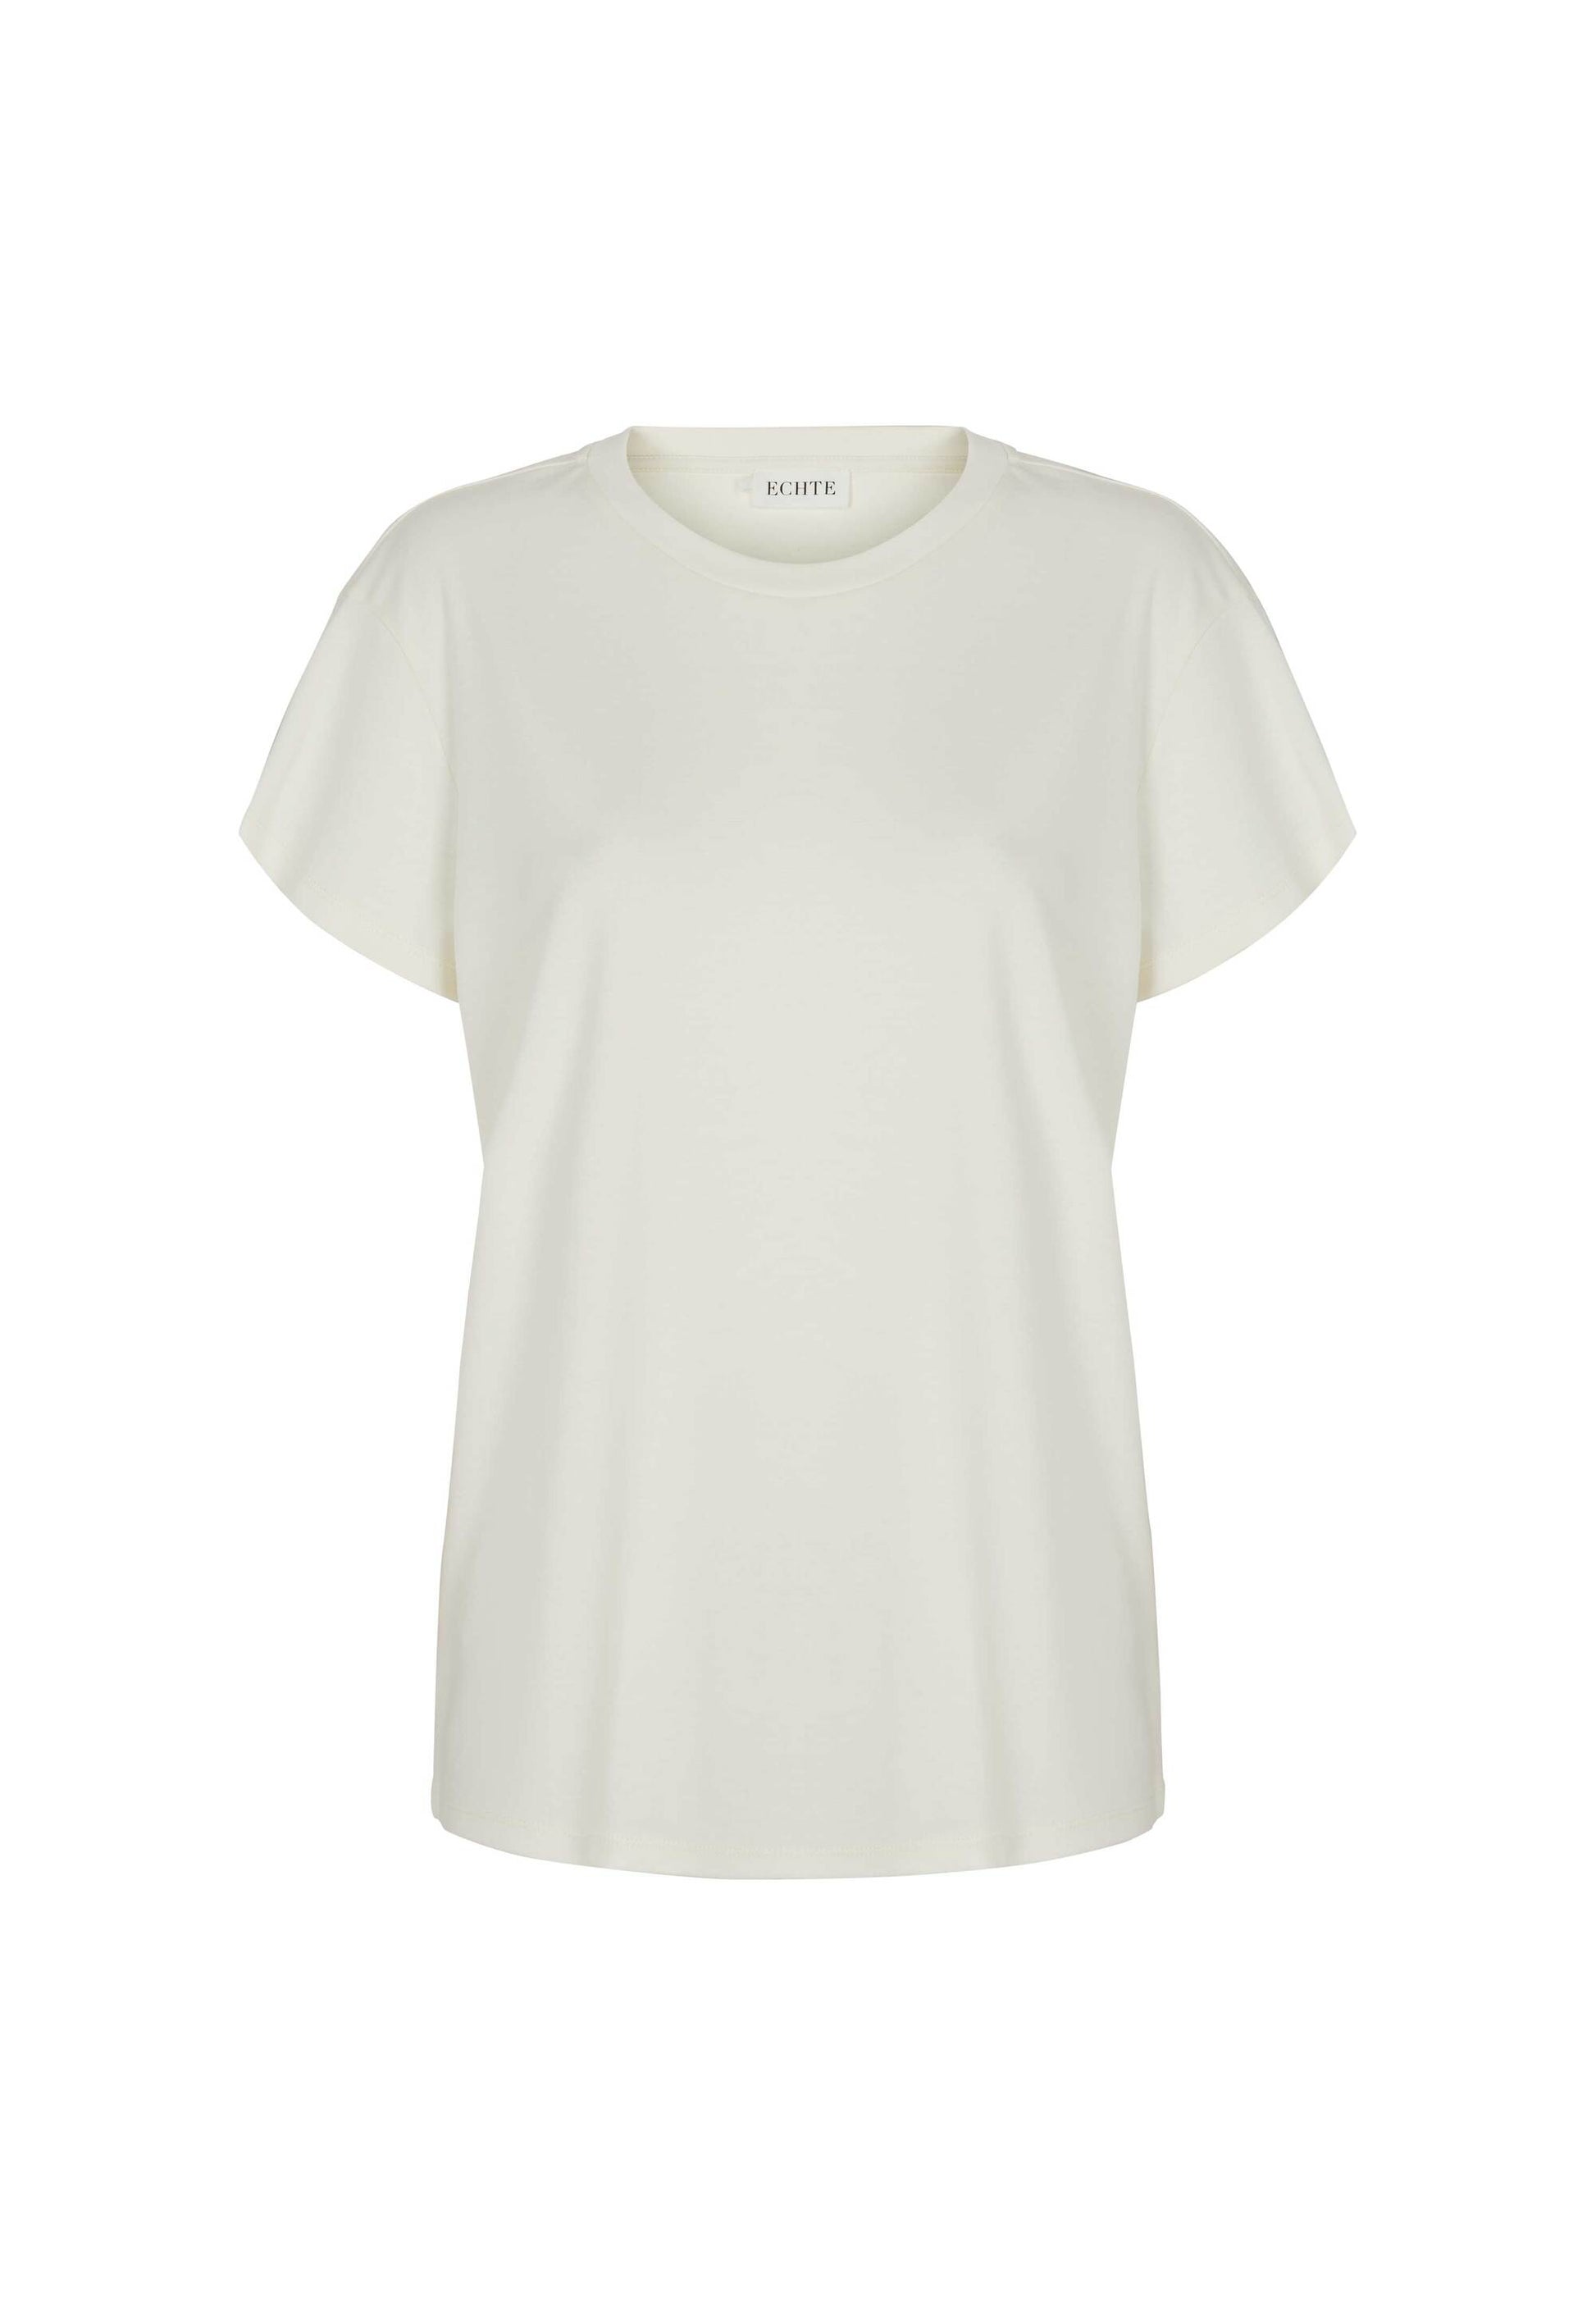 ECHTE SS T-shirt, T-shirts T-Shirts 01015 Off White